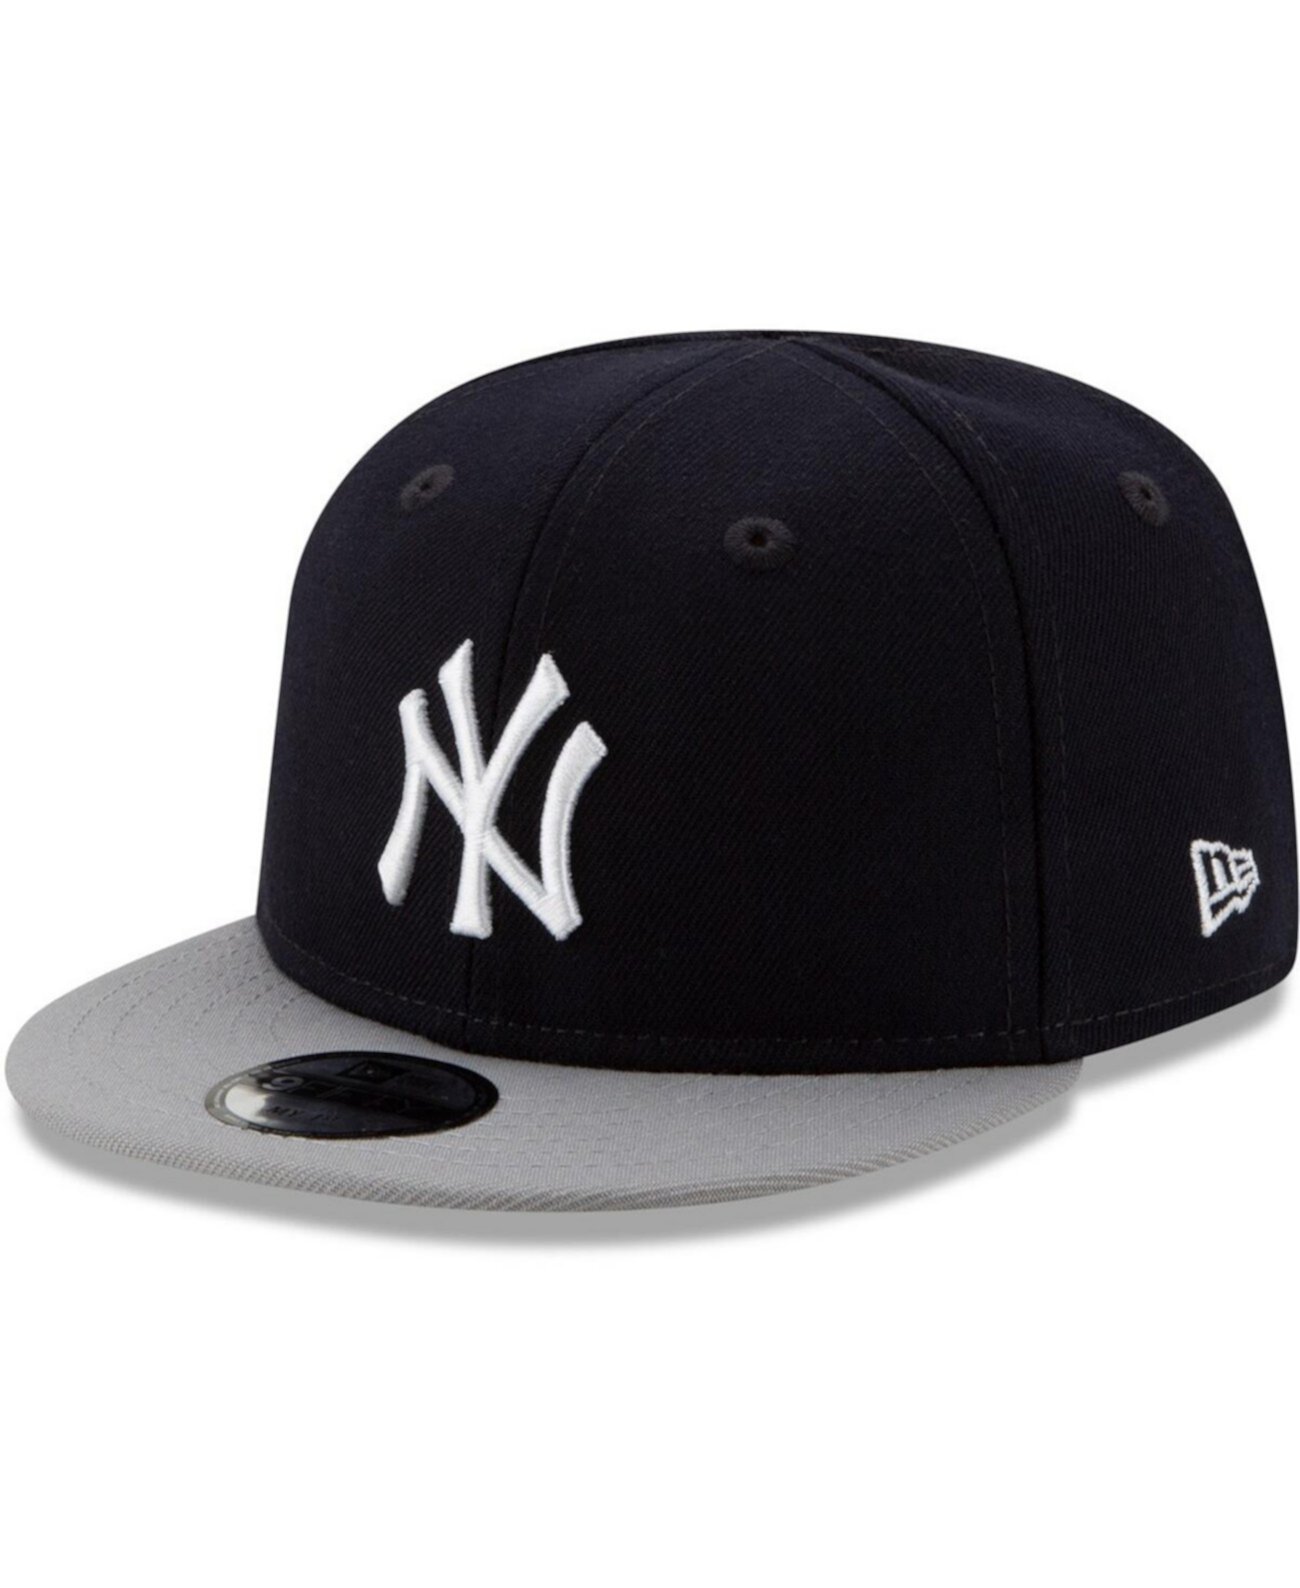 Младенческая унисекс темно-синяя кепка New York Yankees My First 9Fifty New Era